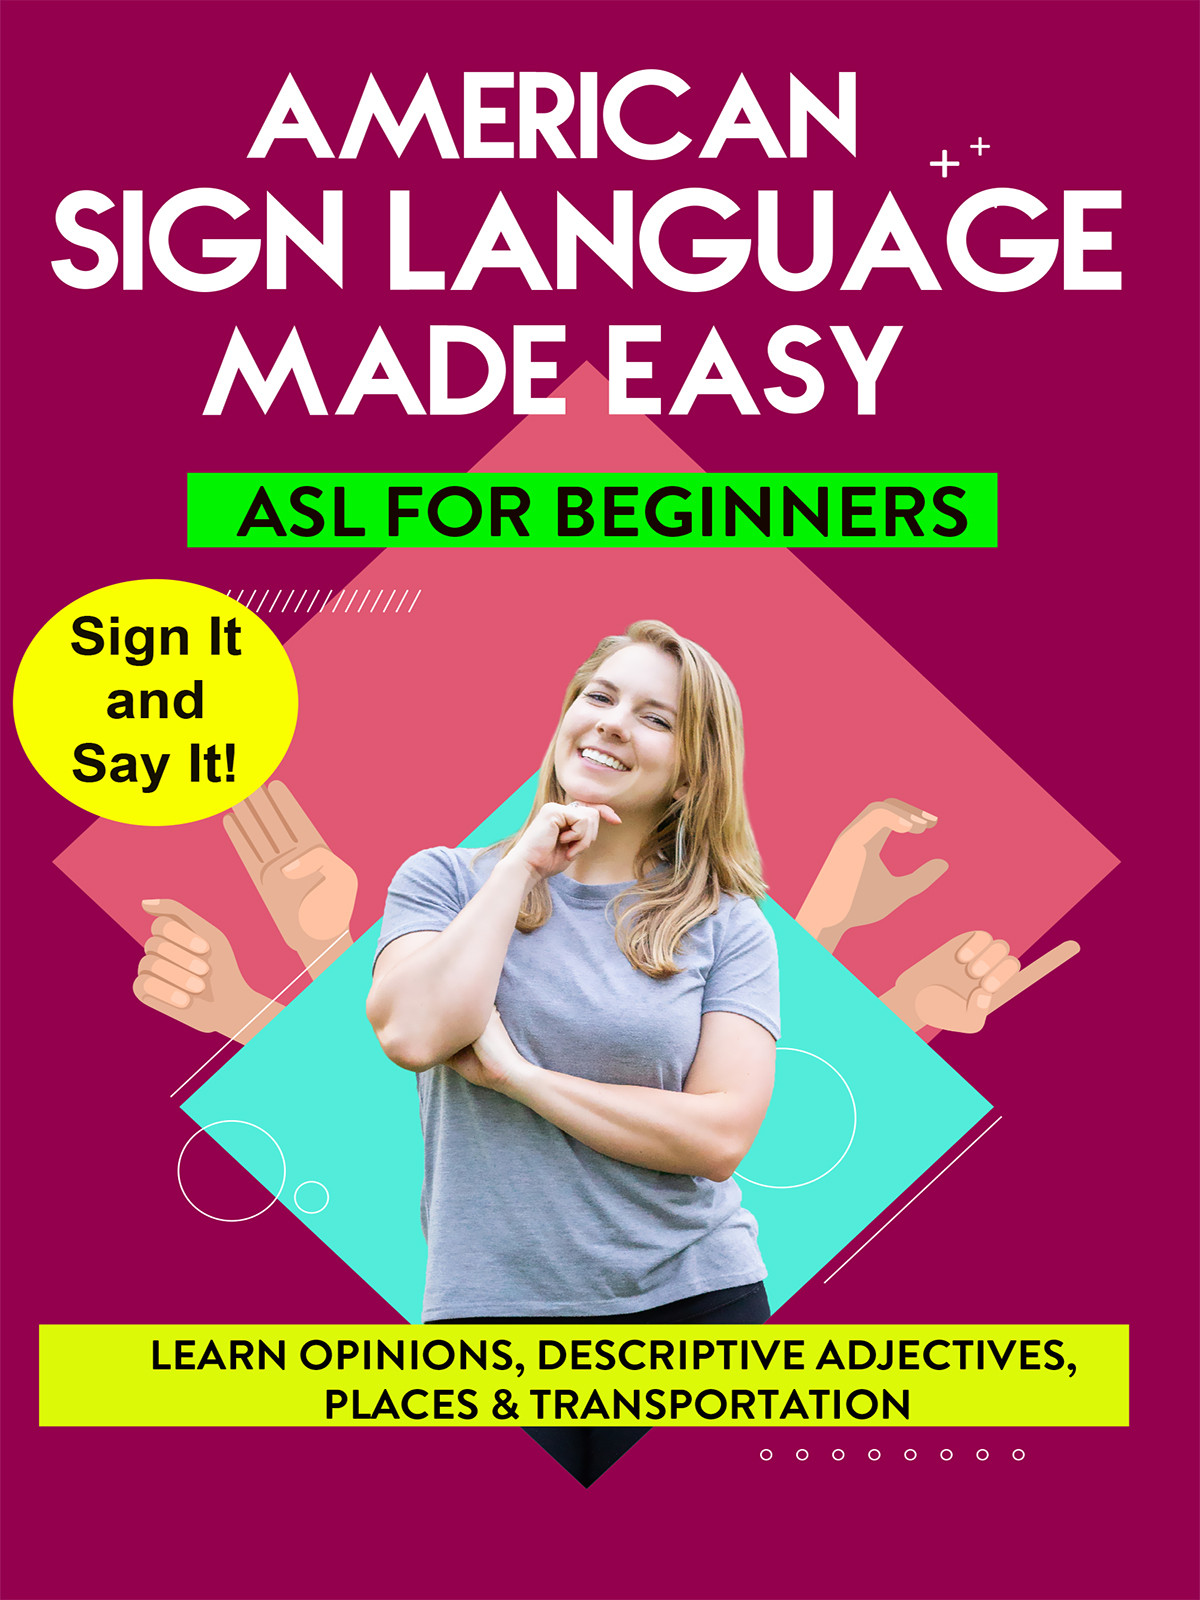 K9803 - ASL - Learn Opinions, Descriptive Adjectives, Places & Transportation